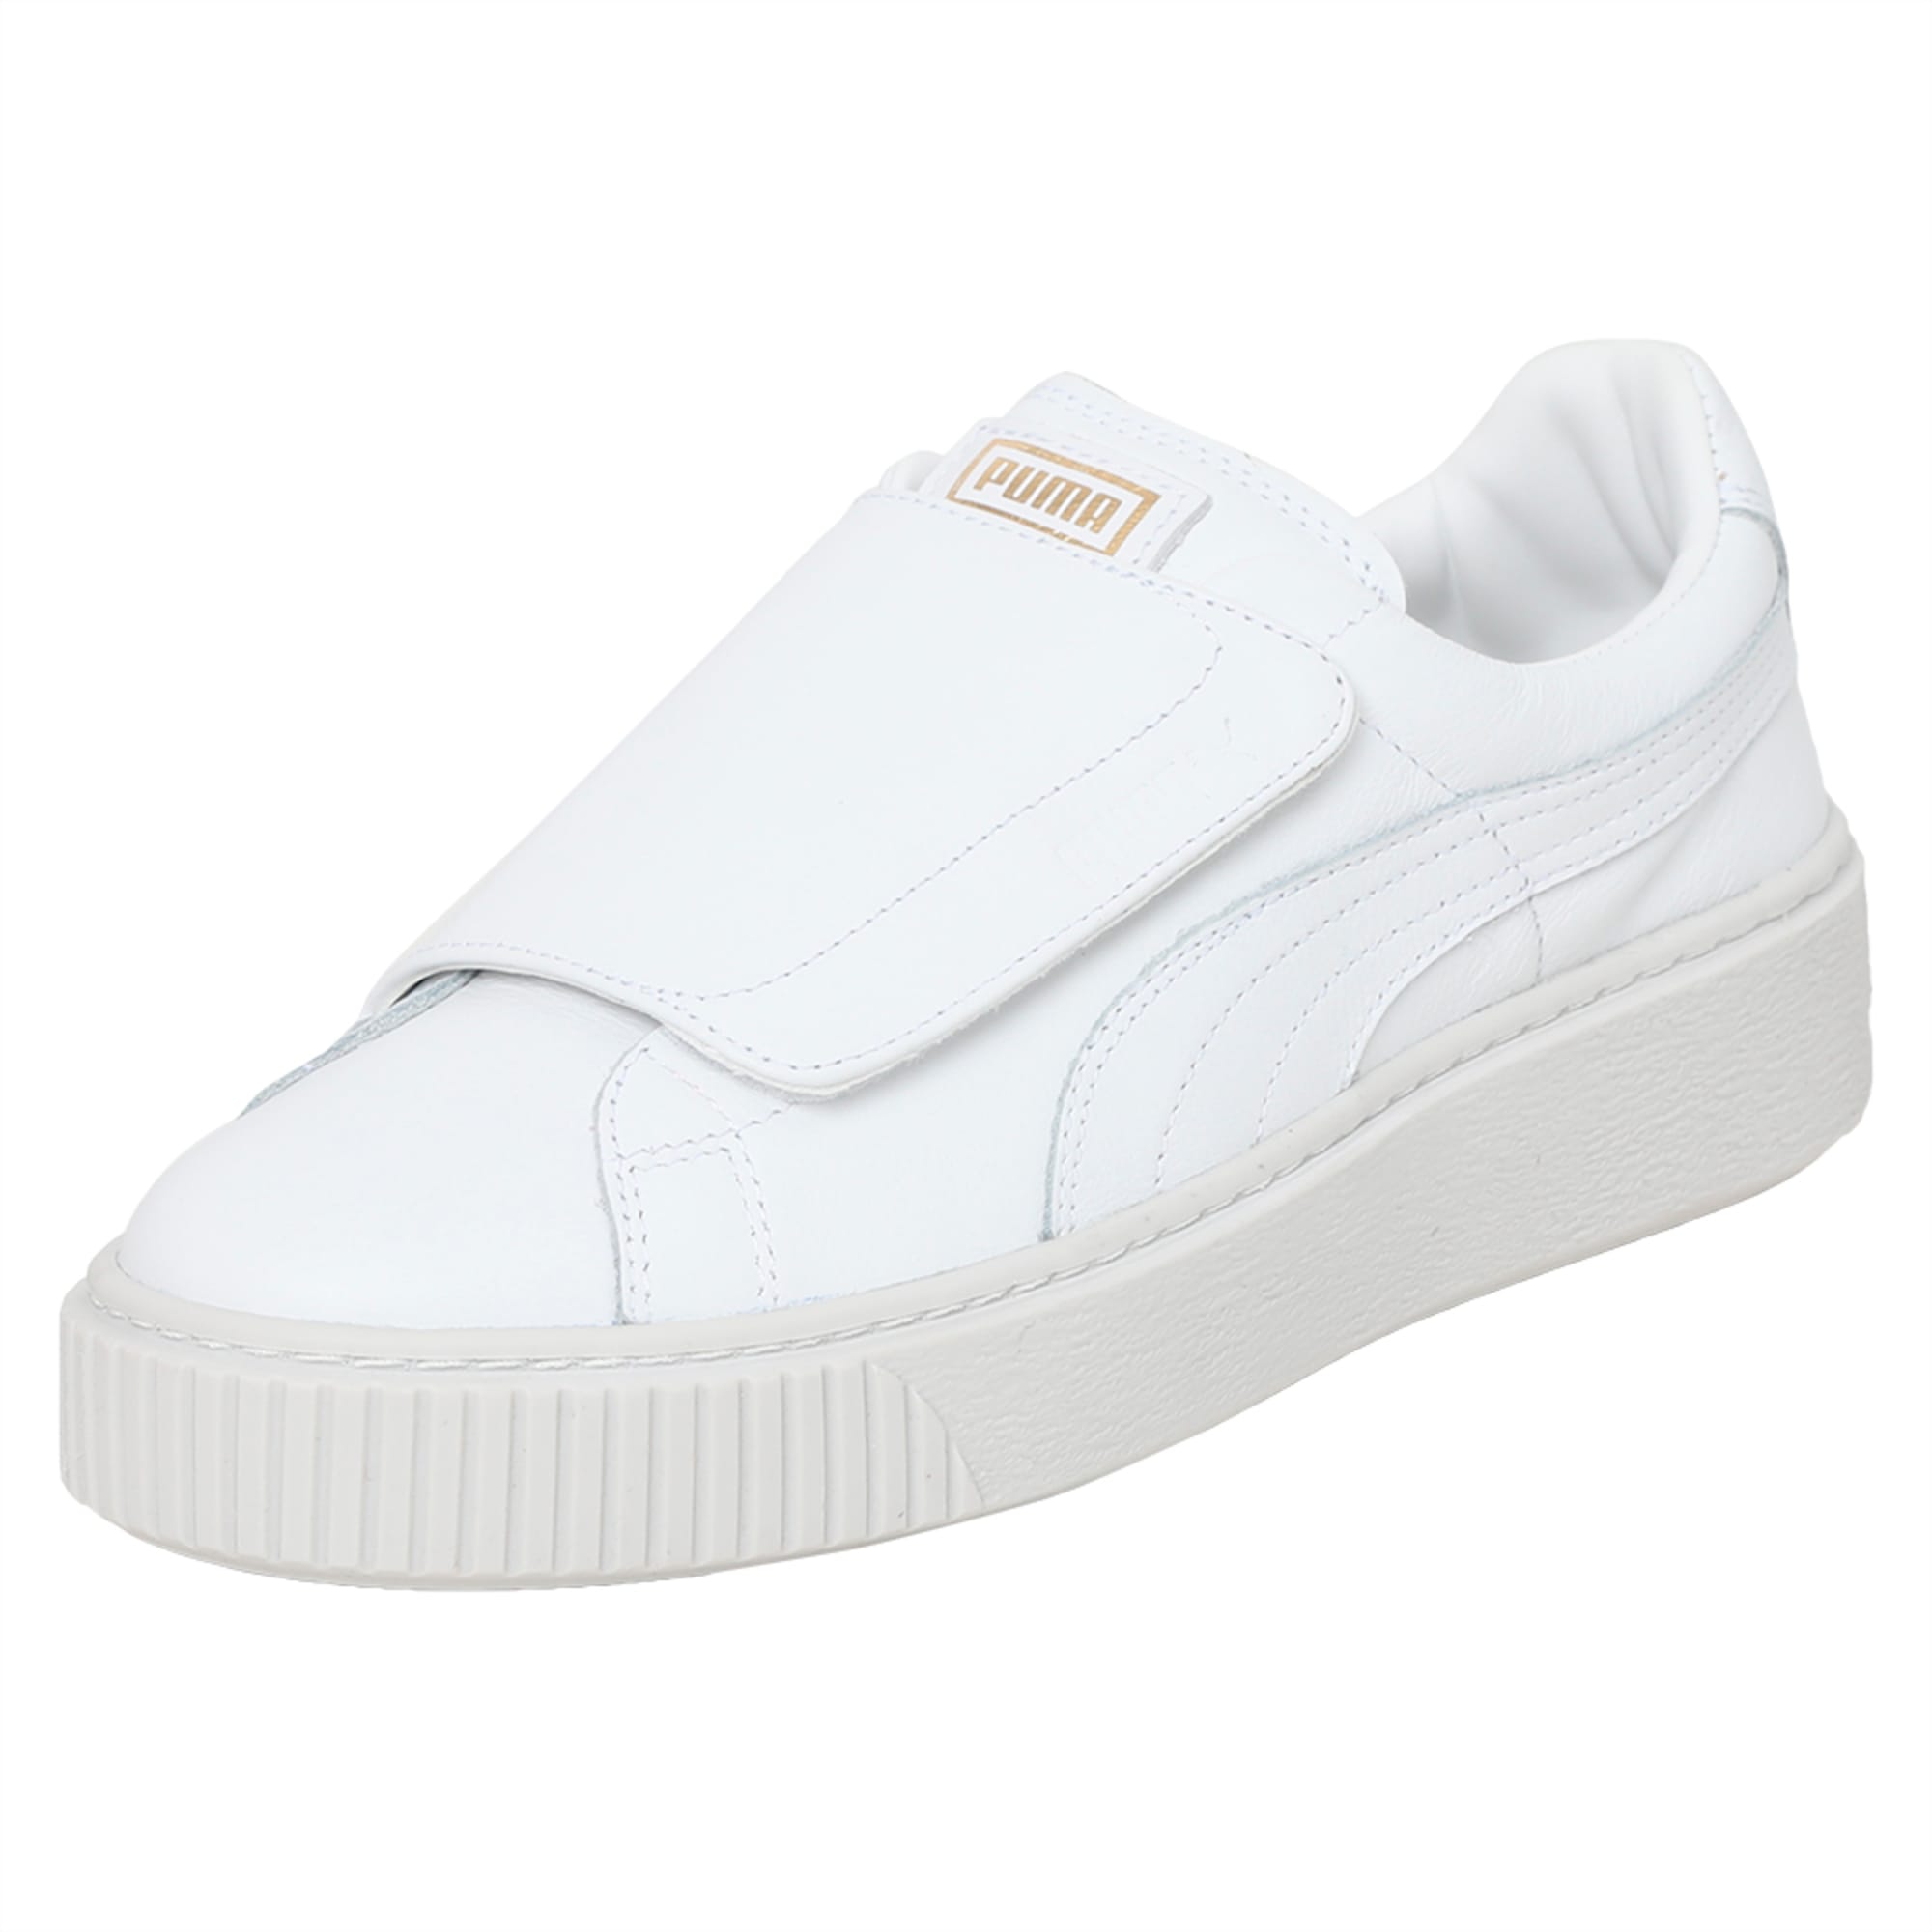 puma basket platform sneaker white